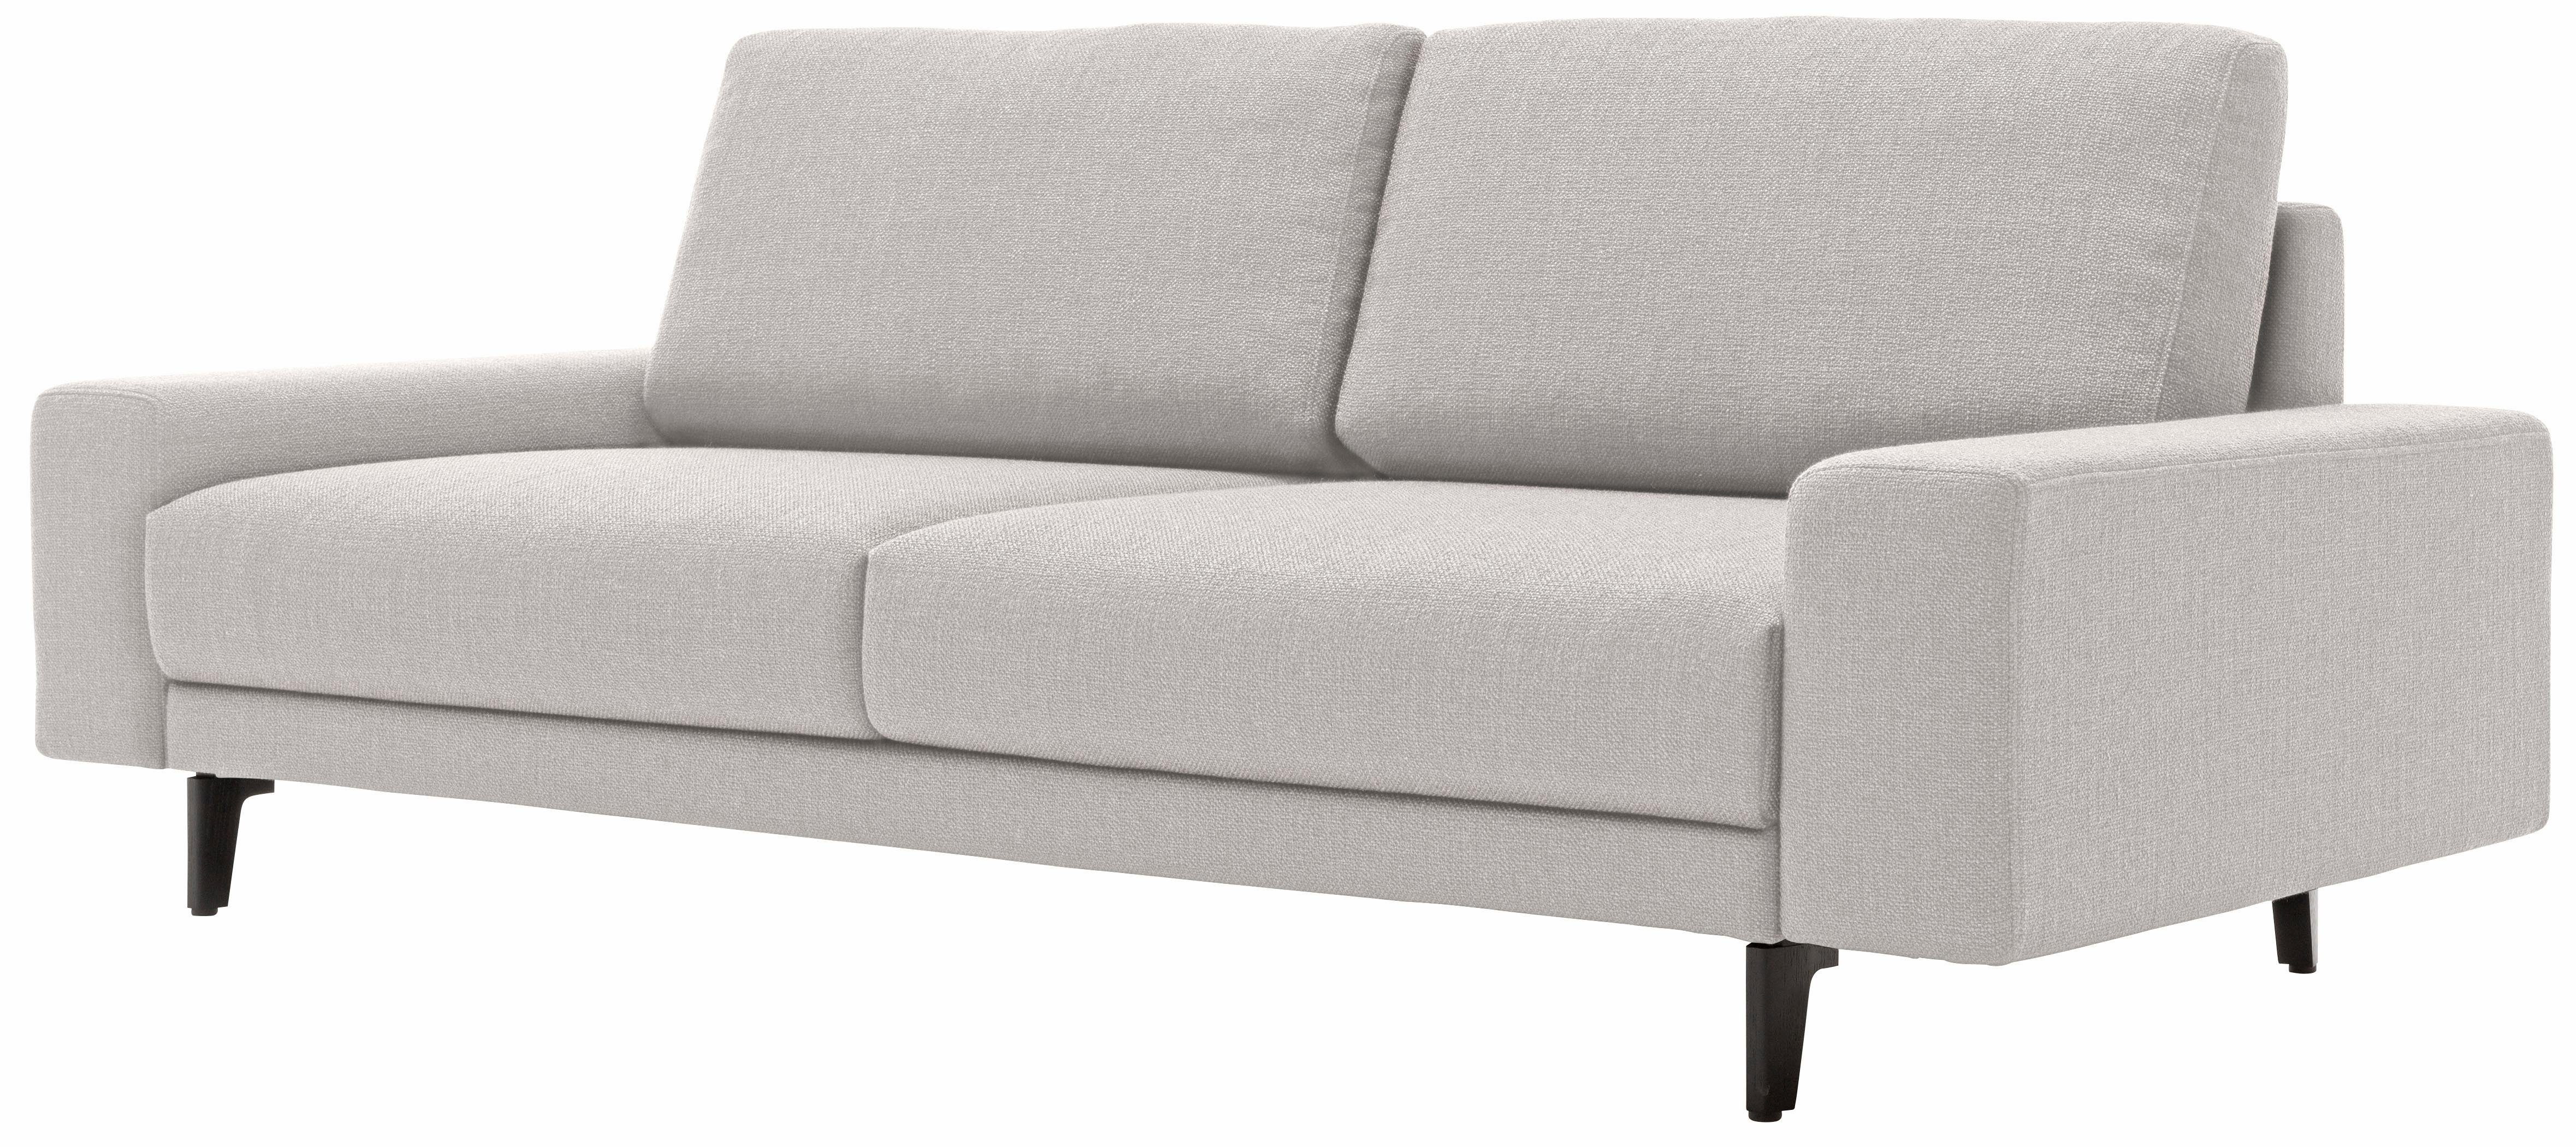 cm in 2-Sitzer Alugussfüße sofa niedrig, Armlehne hs.450, hülsta Breite 180 umbragrau, breit